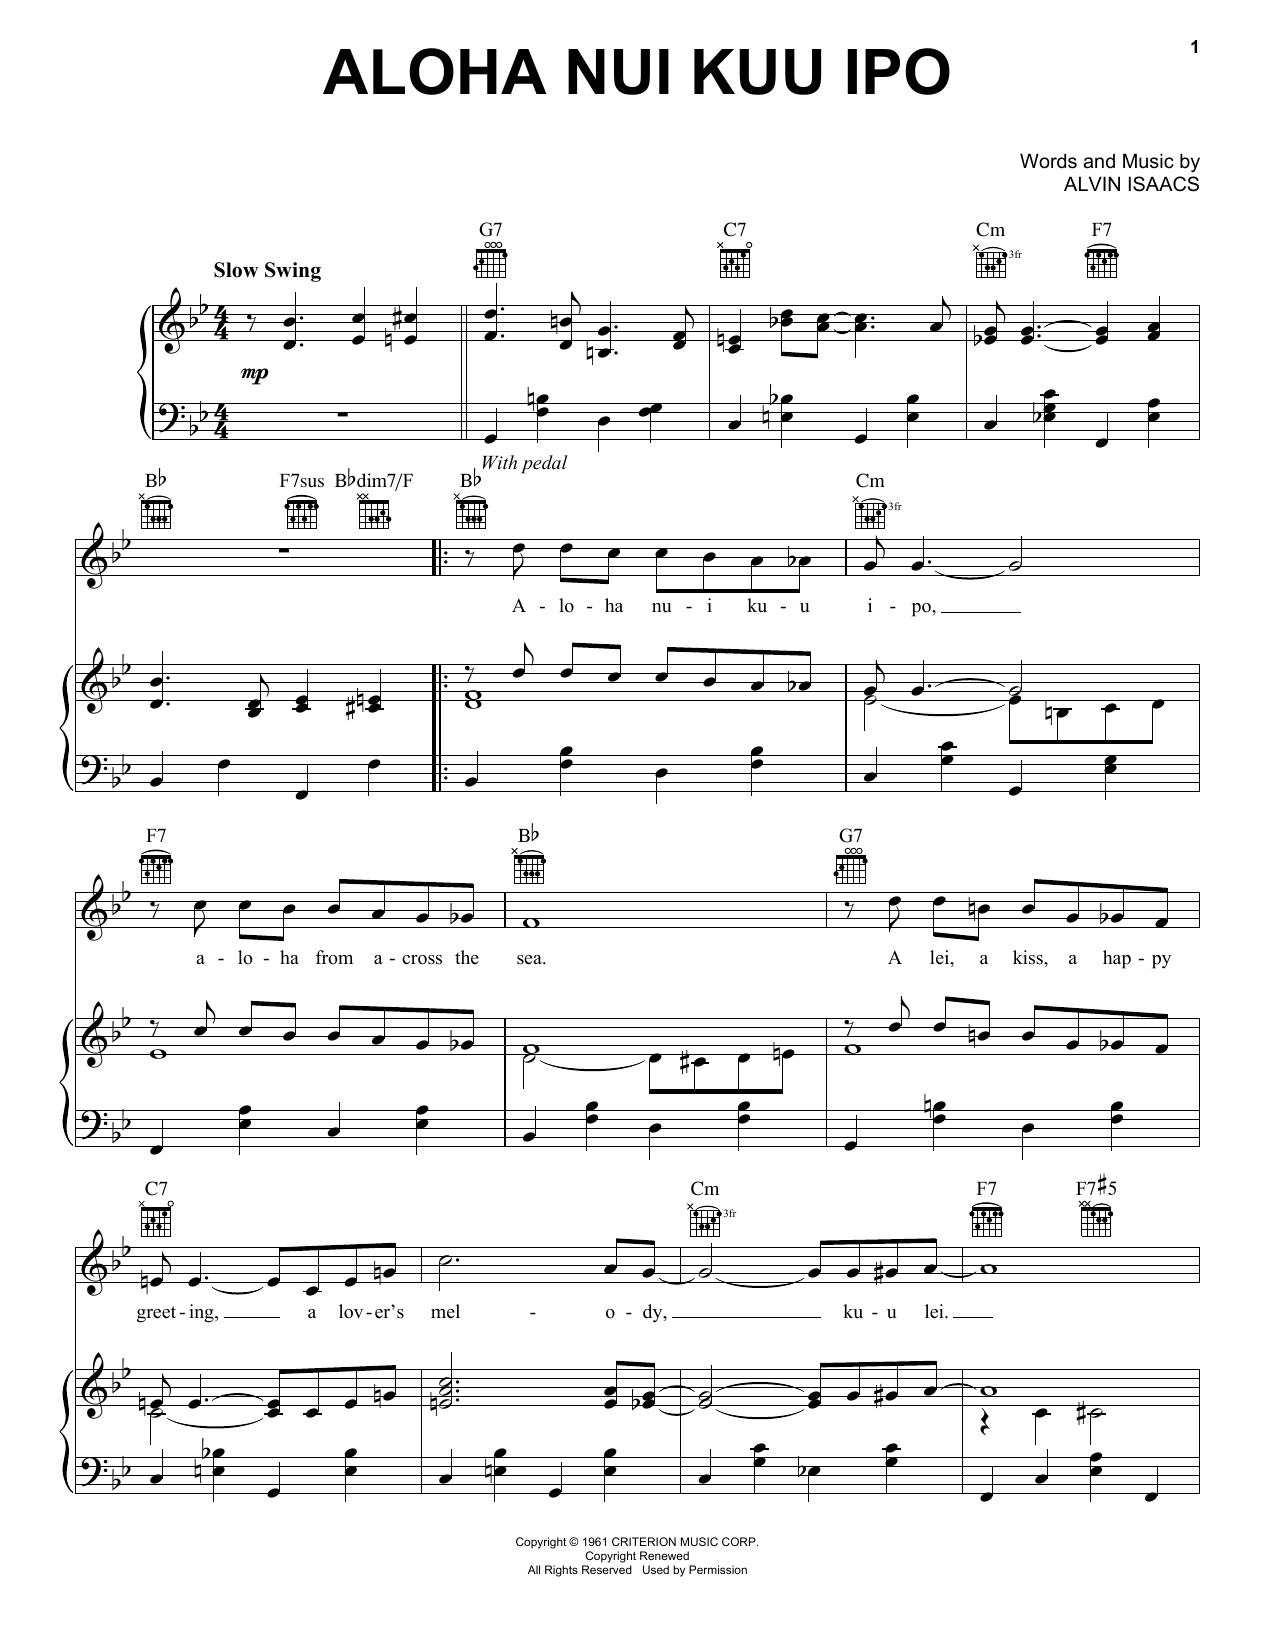 Alvin Isaacs Aloha Nui Kuu Ipo Sheet Music Notes & Chords for Piano, Vocal & Guitar (Right-Hand Melody) - Download or Print PDF